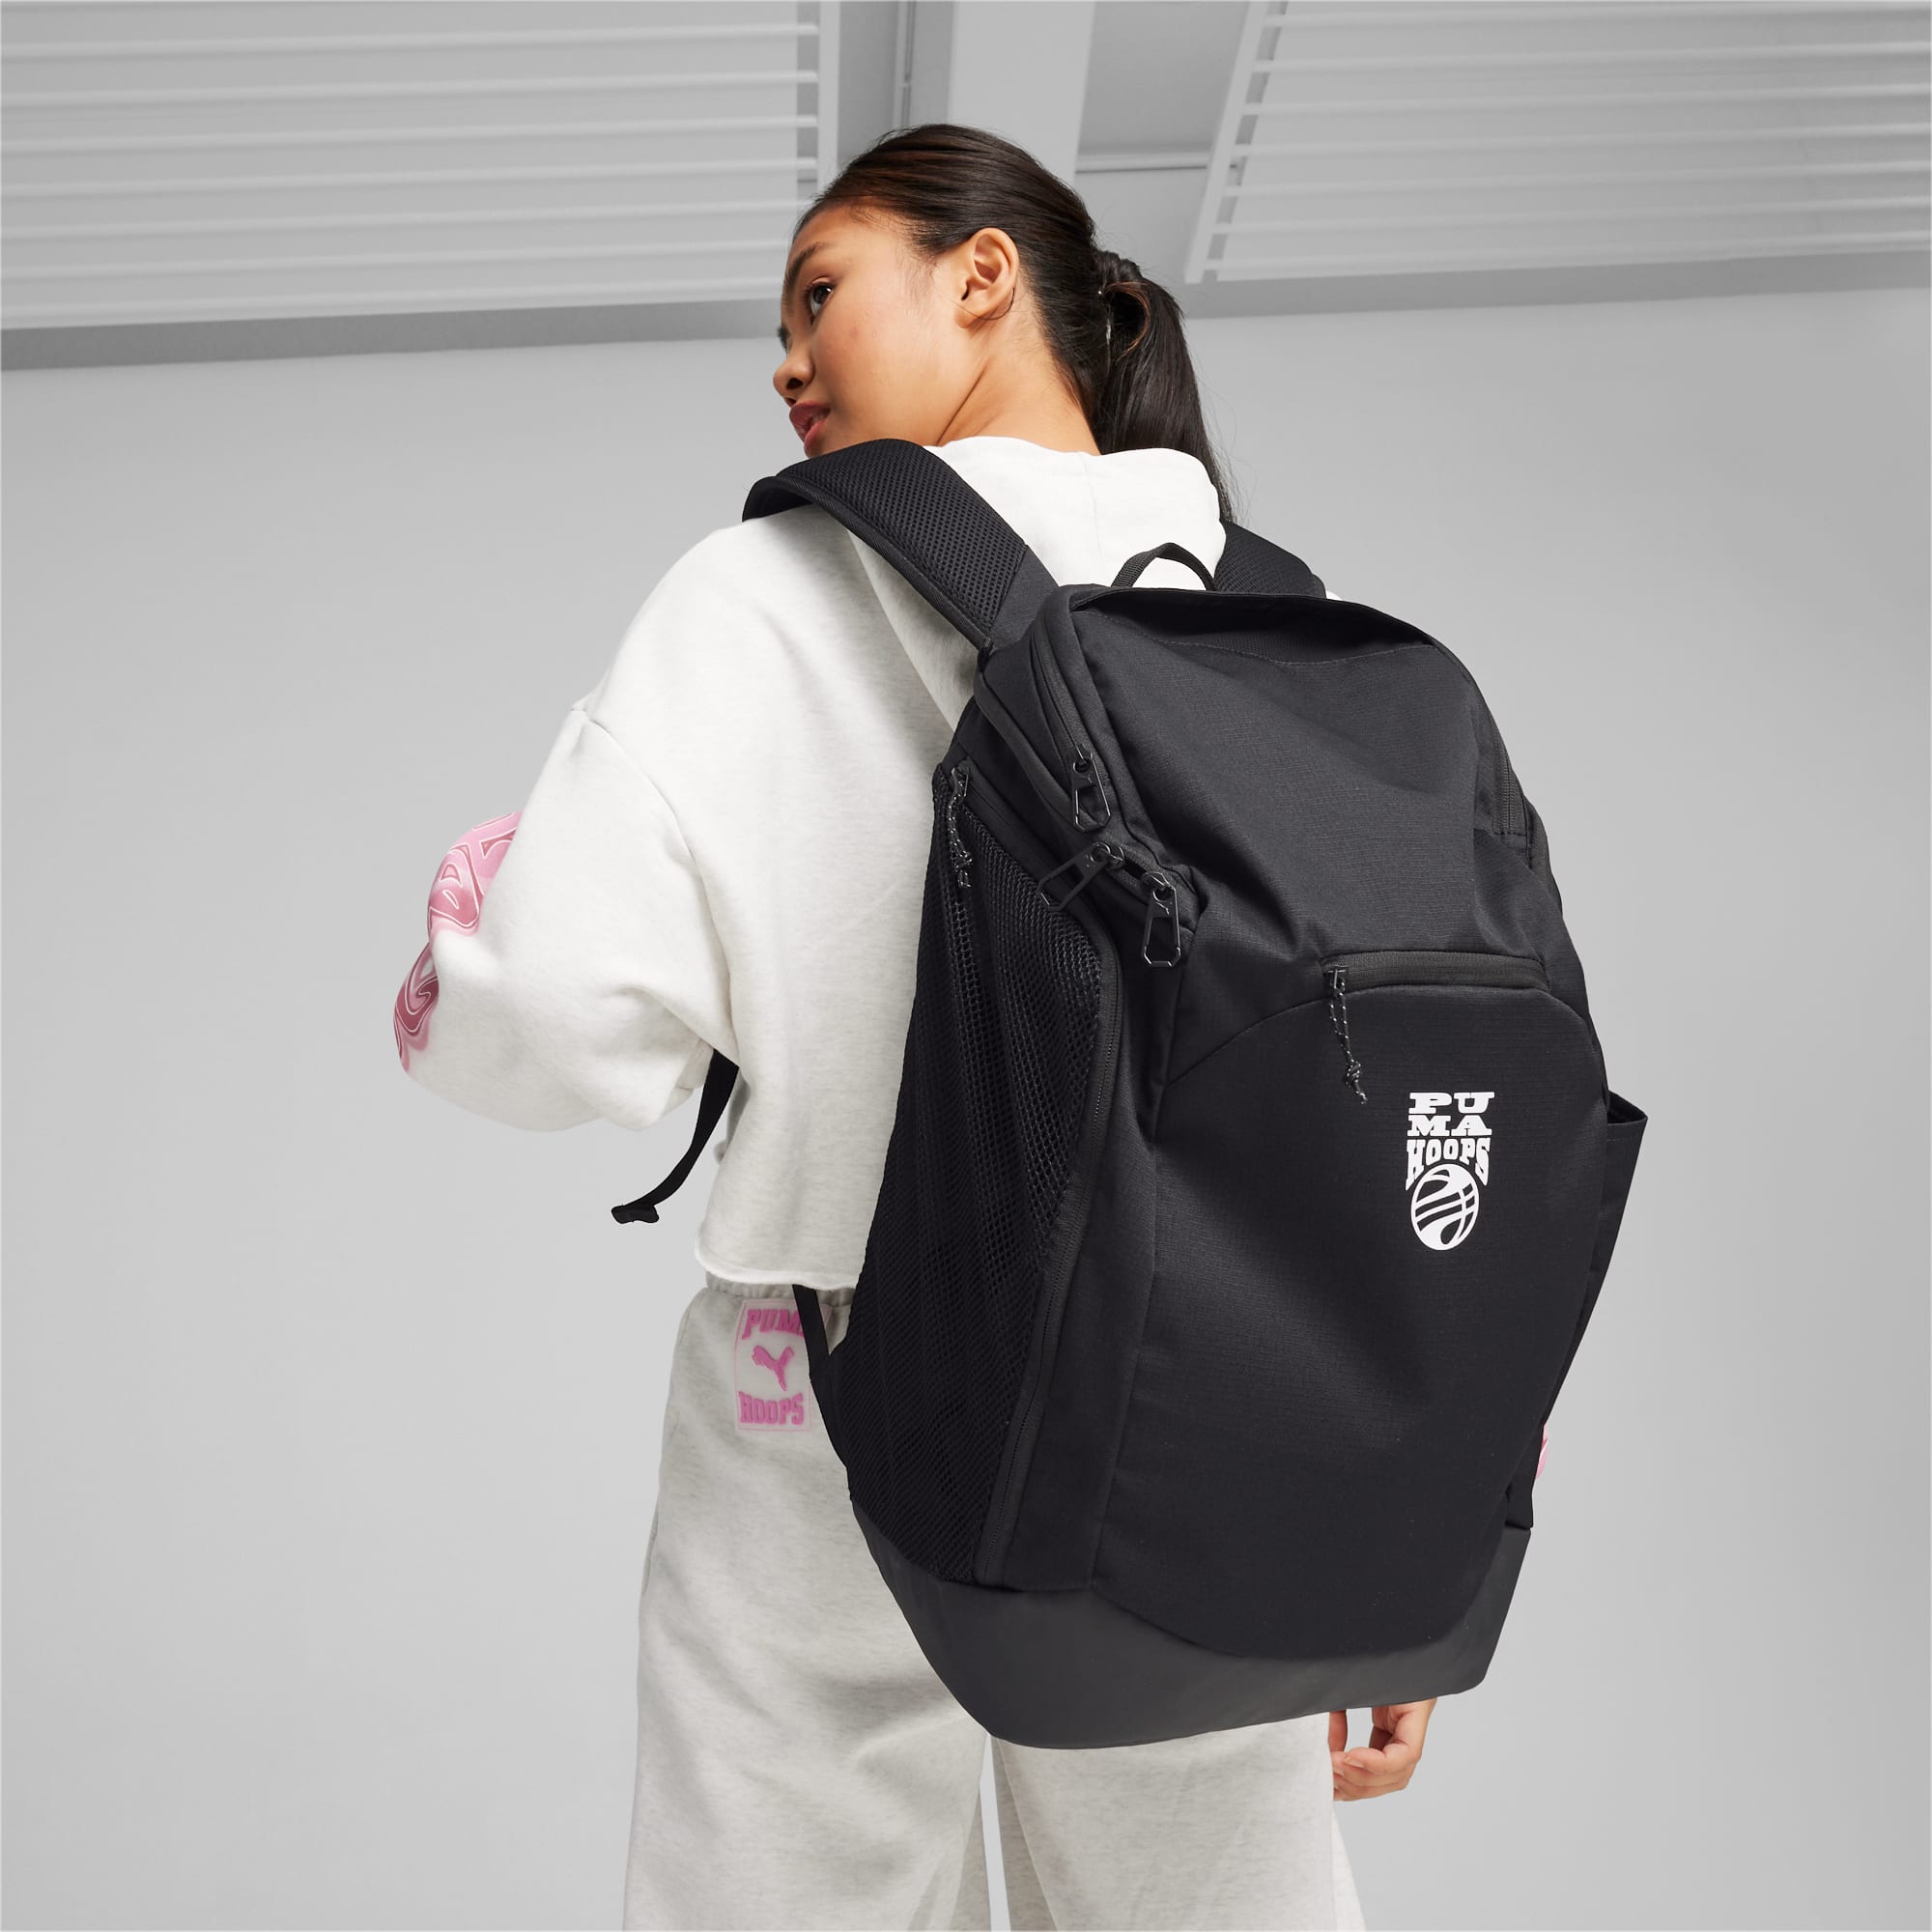 Women's PUMA Basketball Pro Backpack, Black/White, Accessories